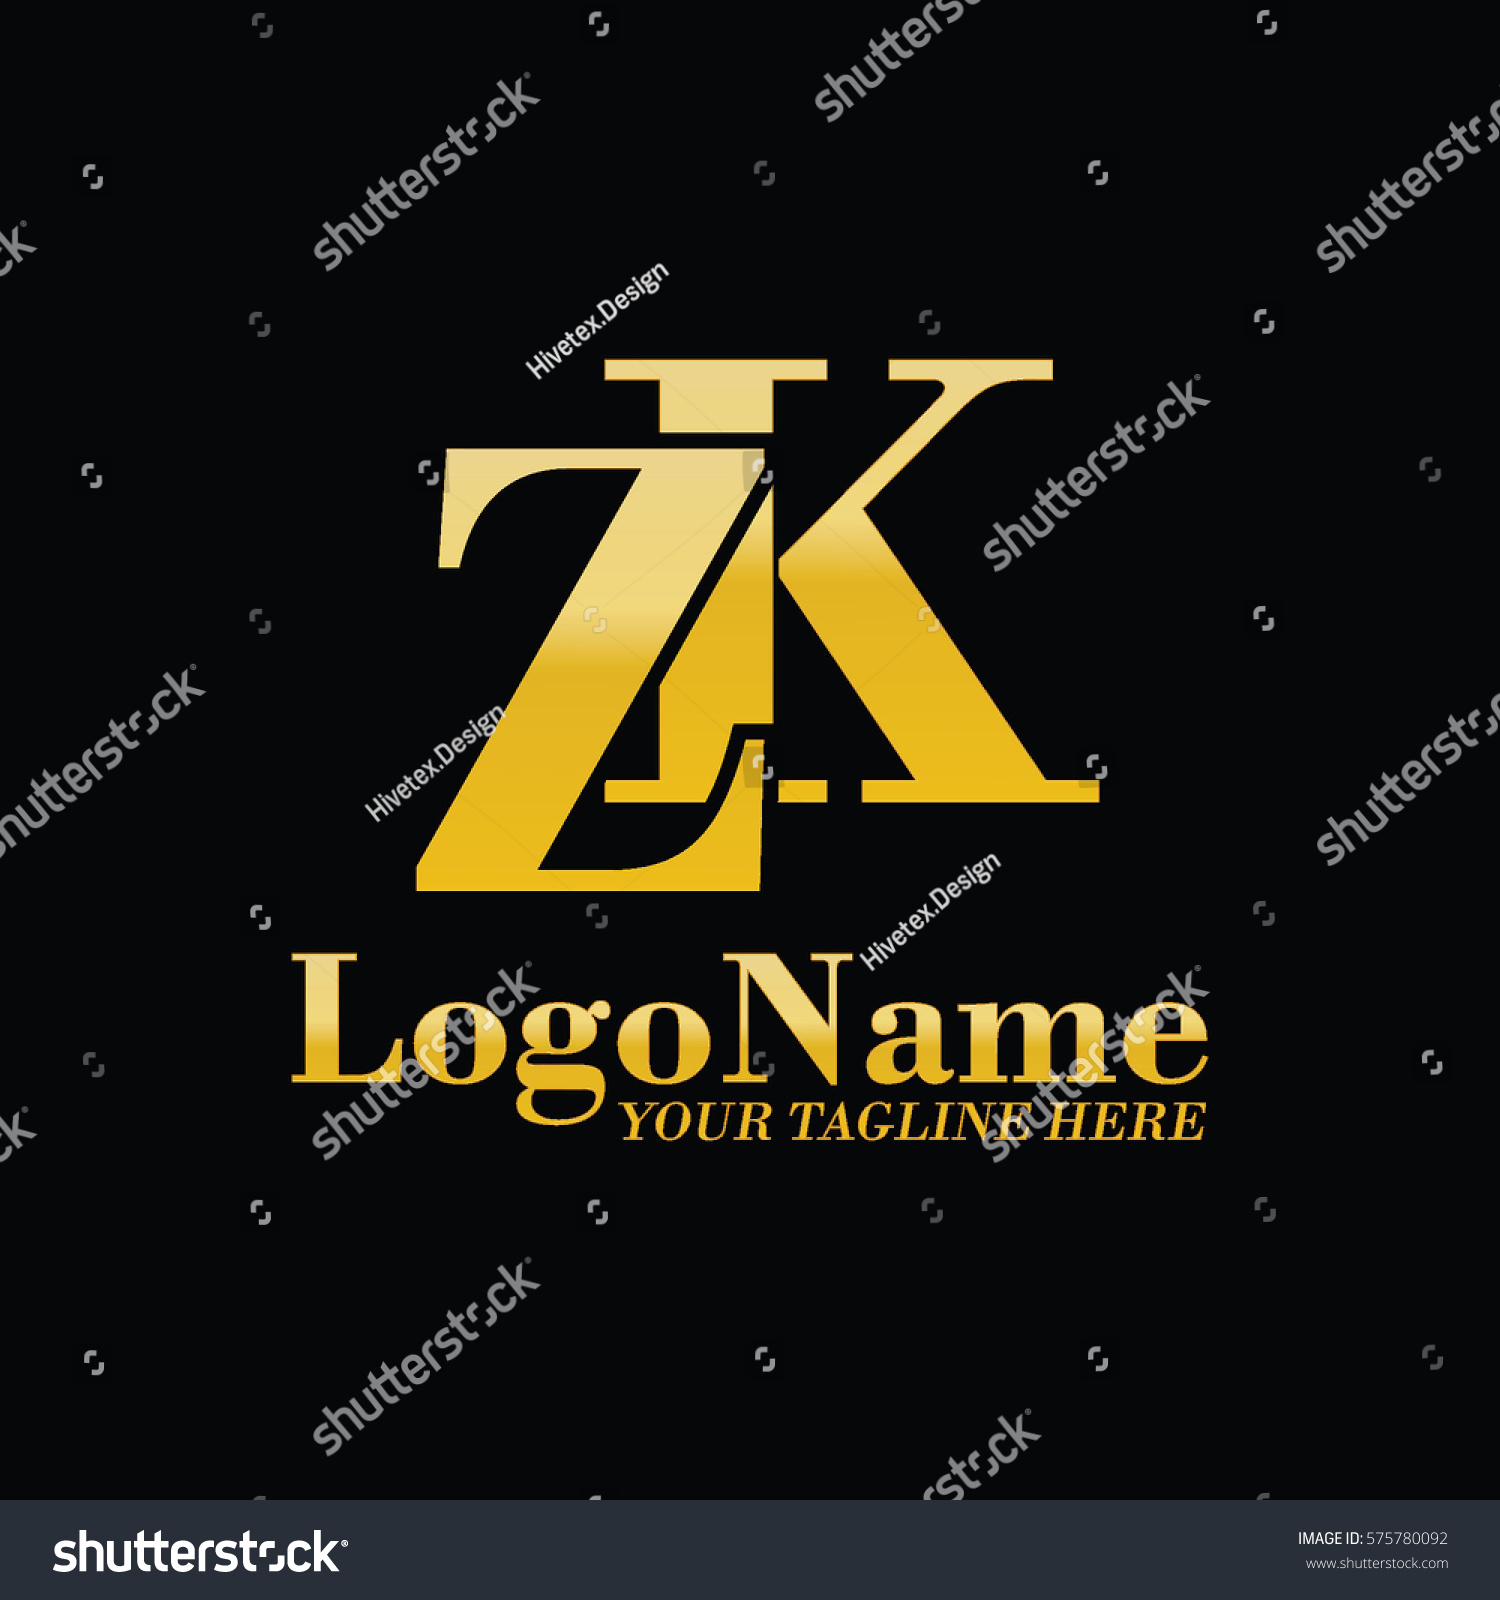 Zk Logo Stock Vector (Royalty Free) 575780092